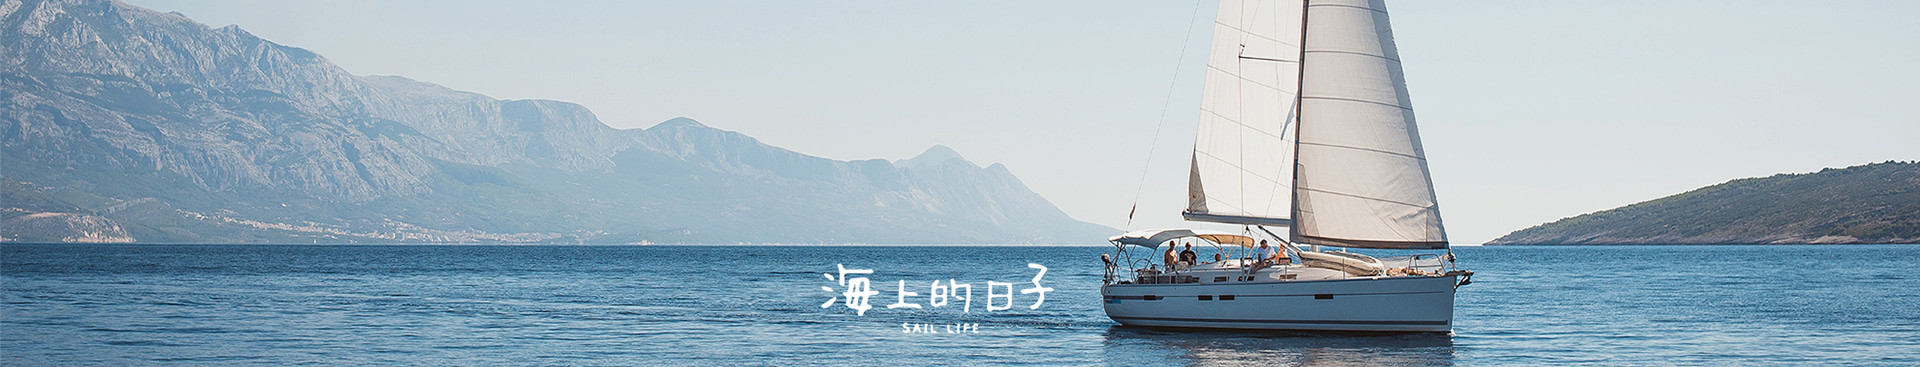 Taipei Tamsui | The Most Beautiful Sailing Yacht Trip